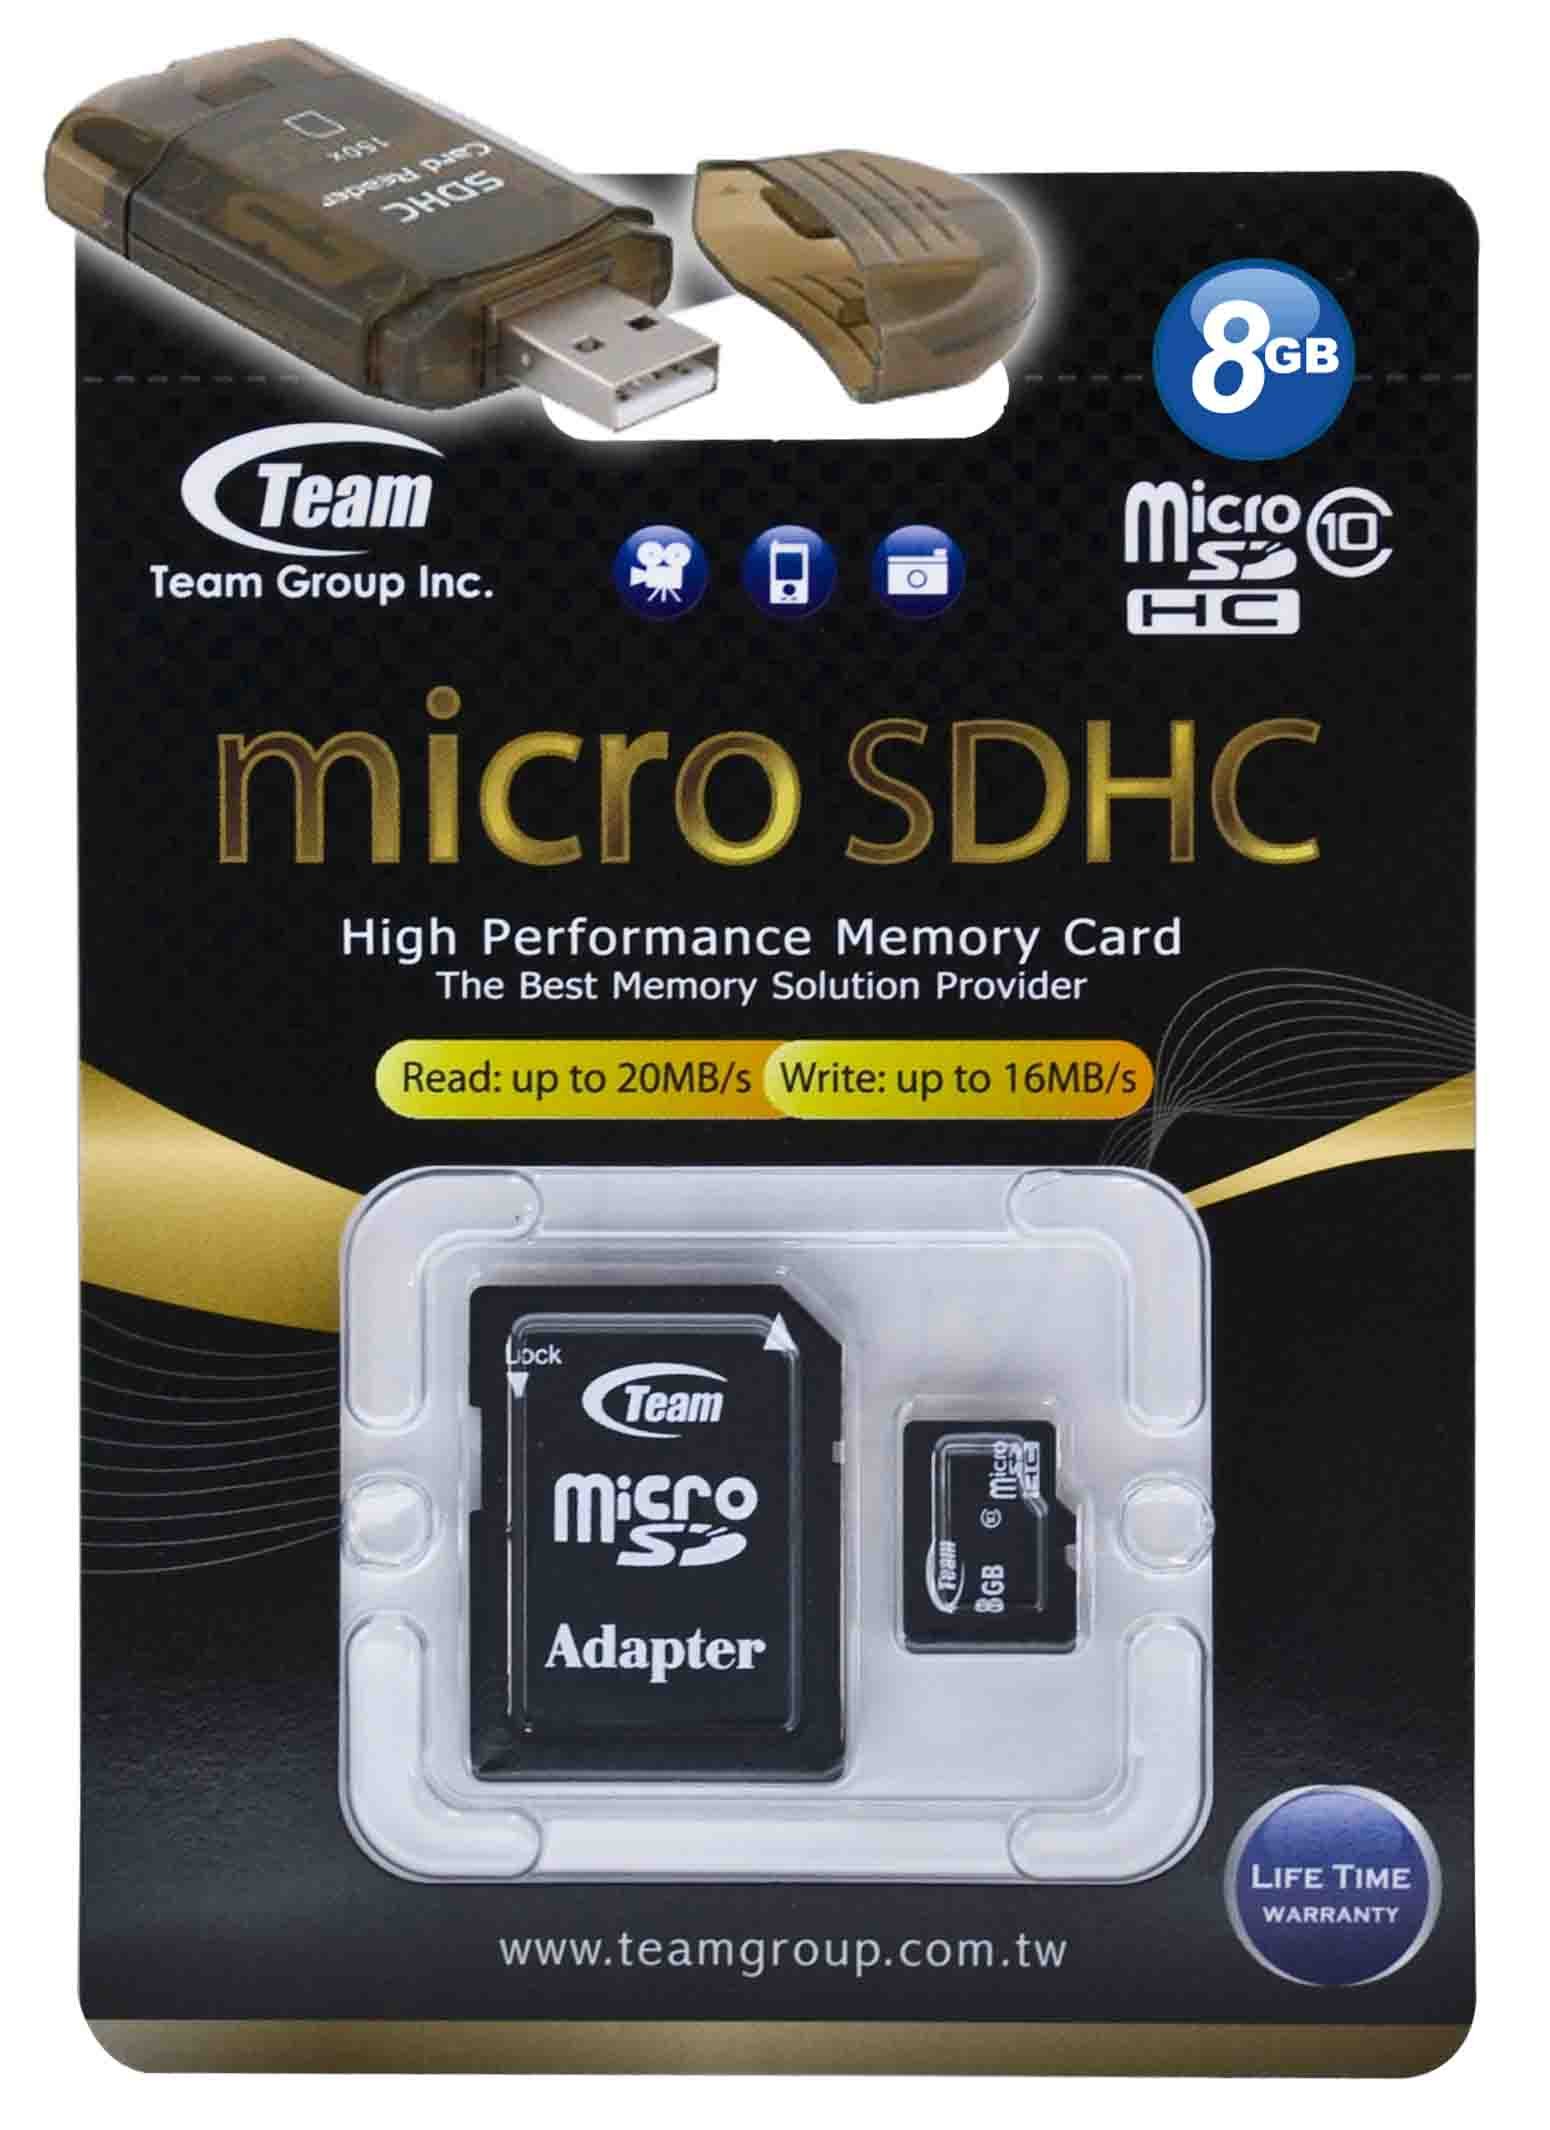 8GB Class 10 MicroSDHC Team High Speed 20MBSec Memory Card. Blazing Fast Card For Huawei U7520 U8150 IDEOS U8300. A free Hig